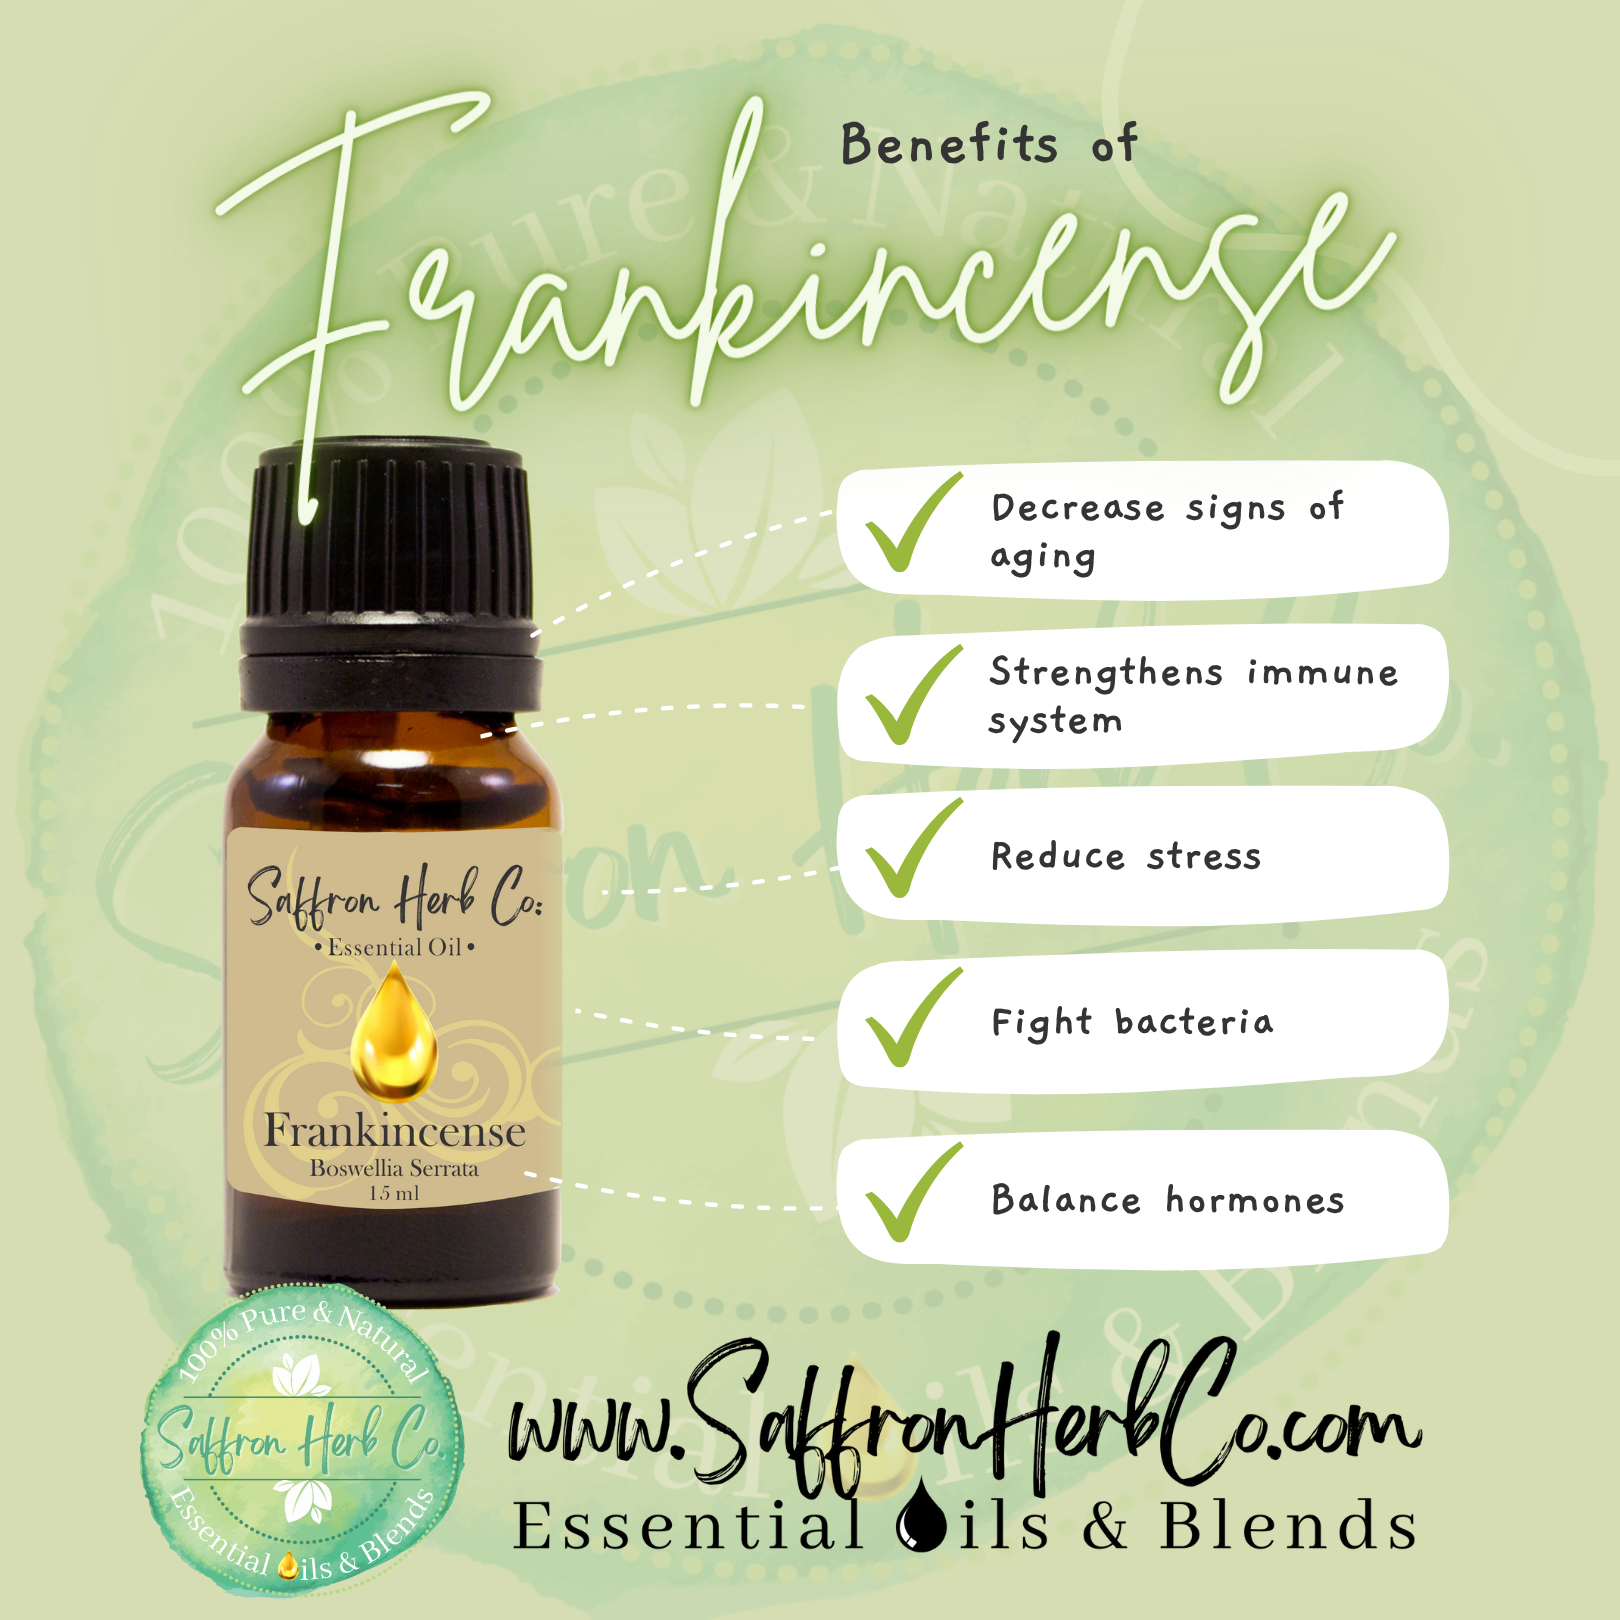 7 Frankincense Essential Oil Uses For Skin - BlissOnly